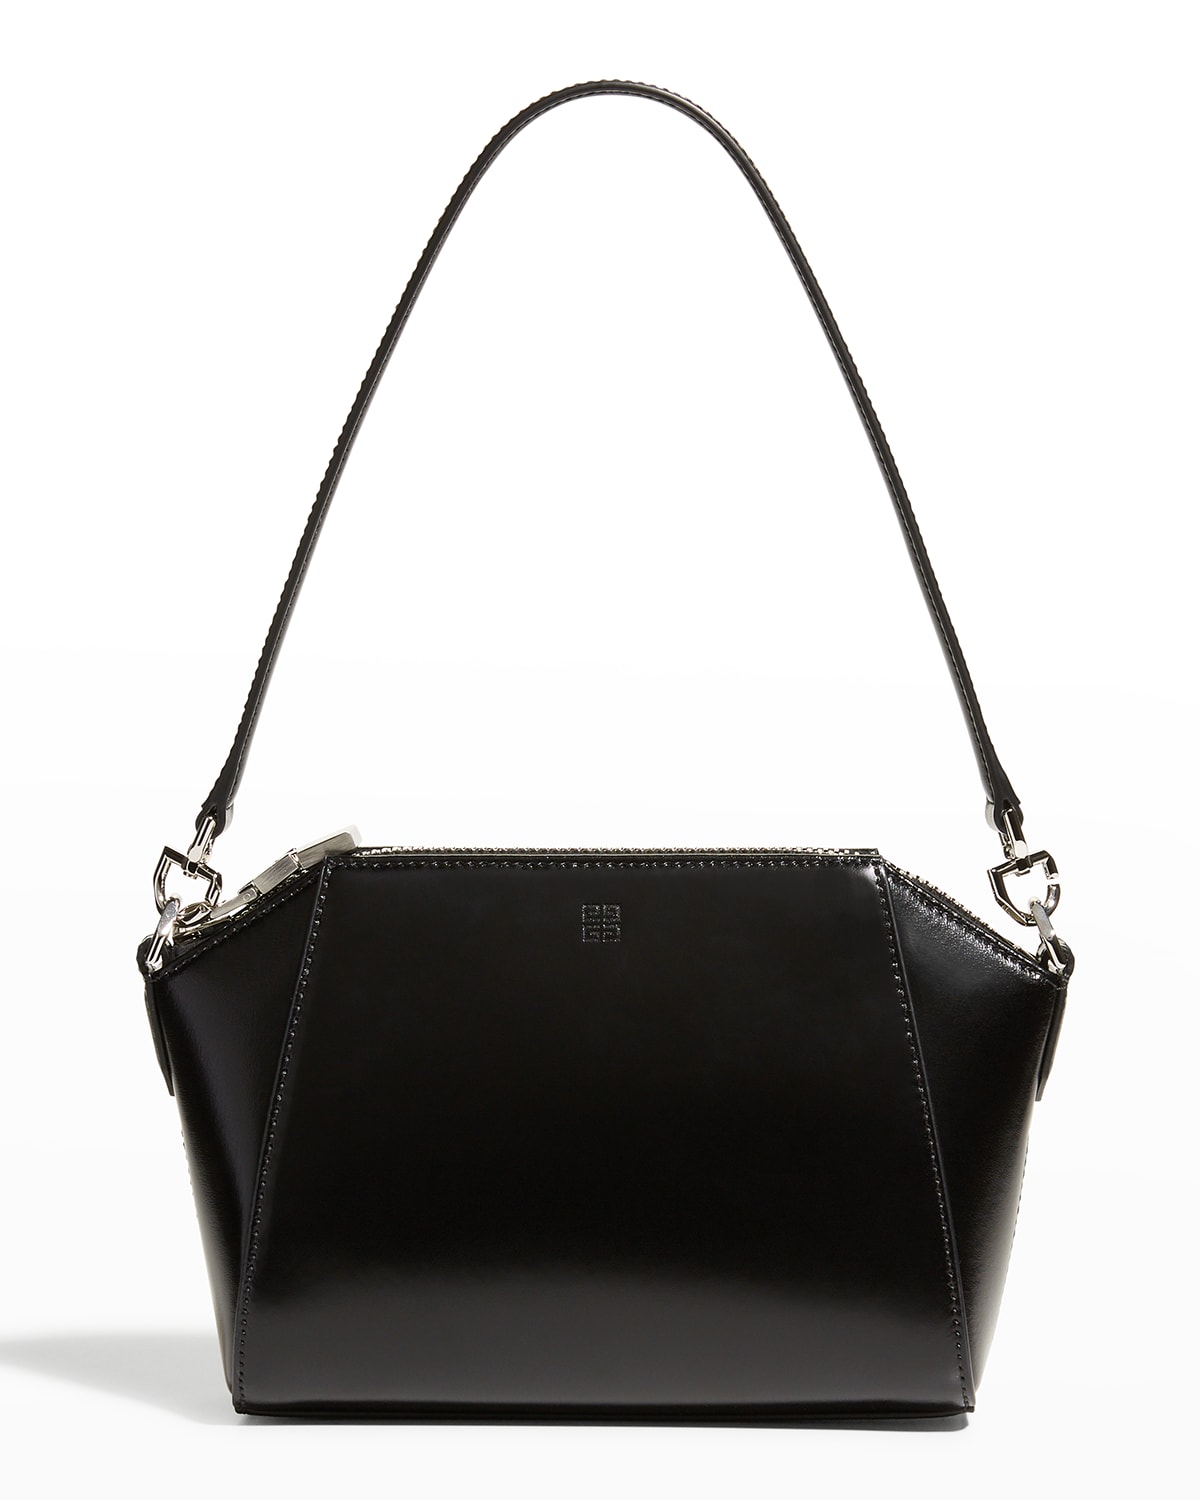 Givenchy Antigona XS Box Leather Shoulder Bag